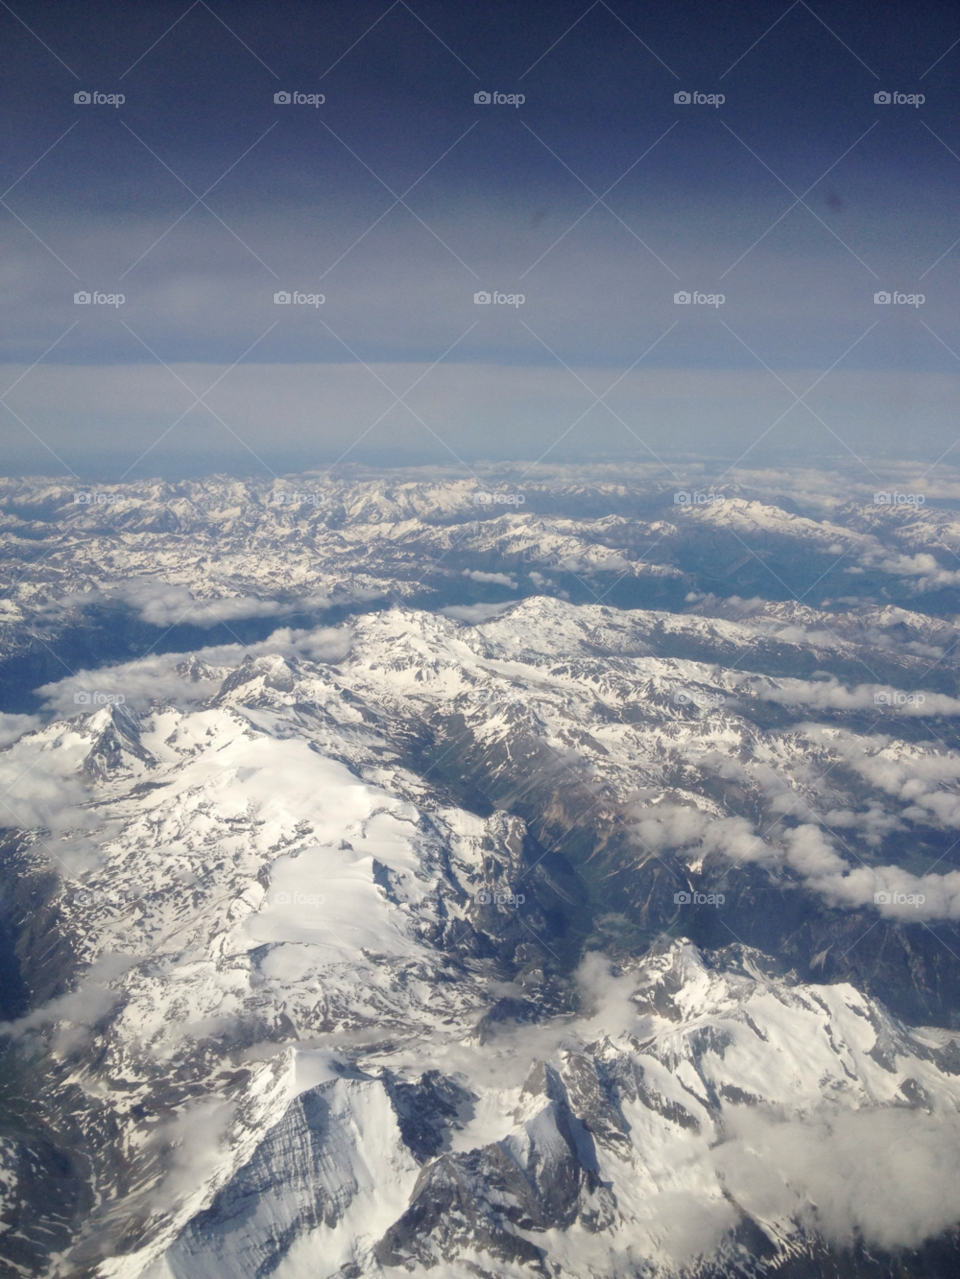 Birds eye mountain view. The Alps from an aeroplane 